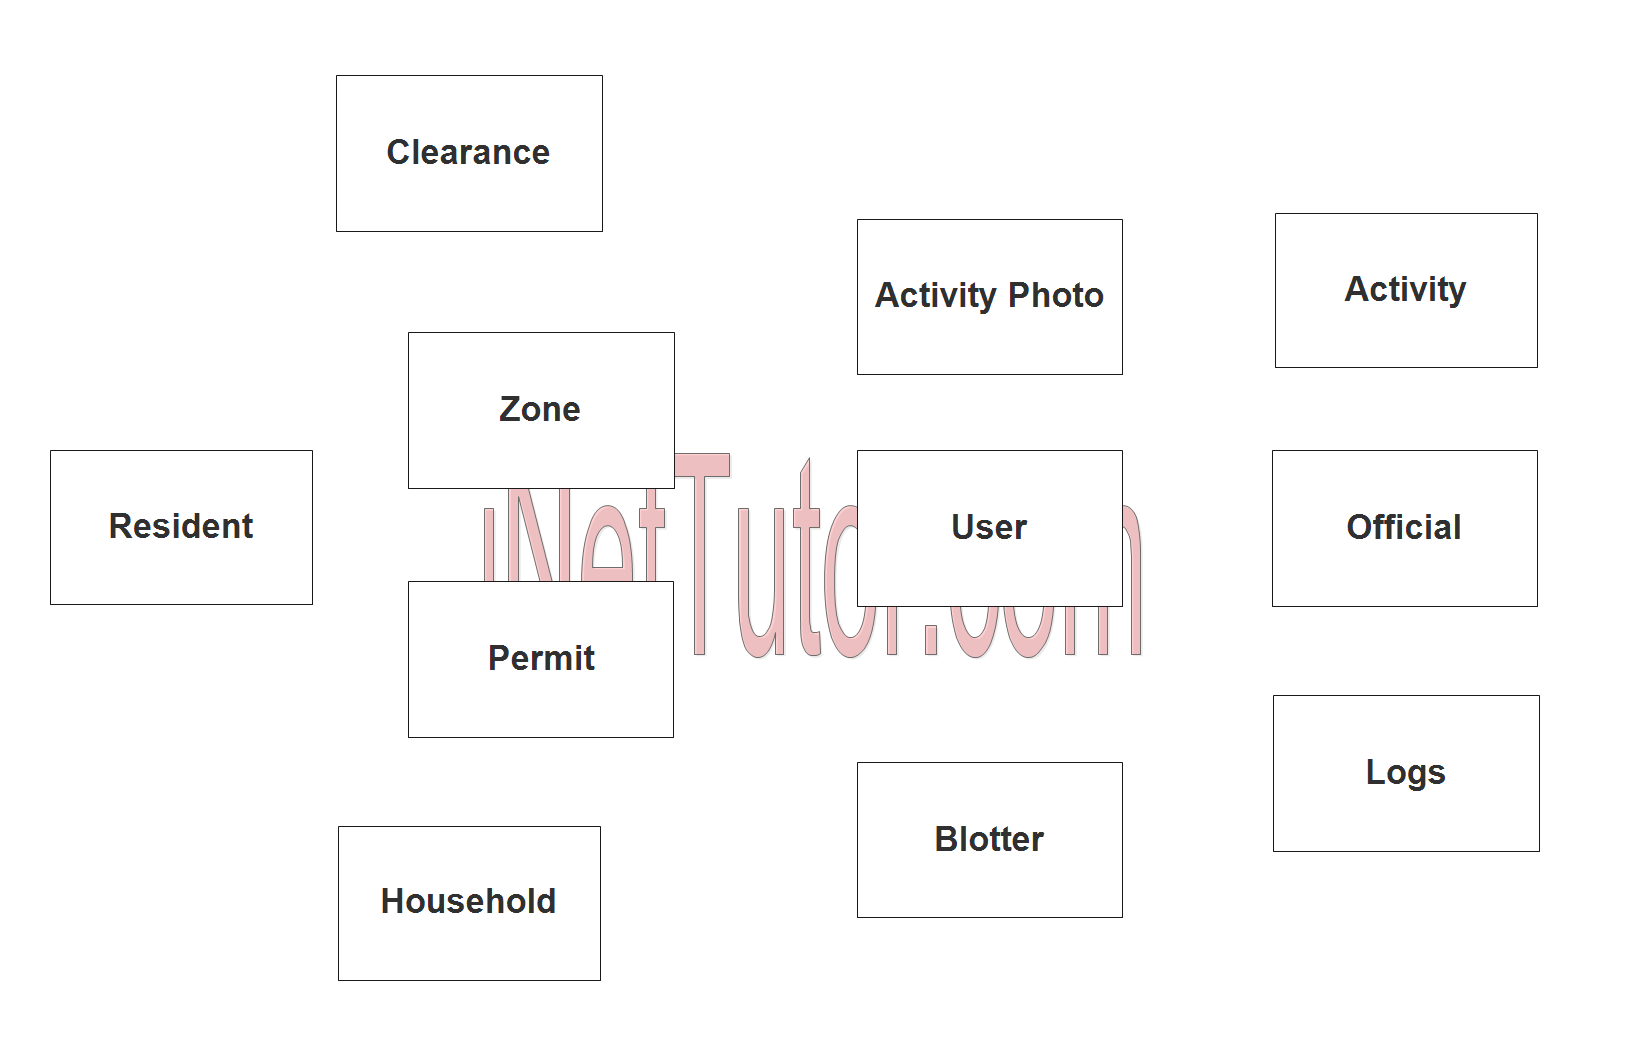 Barangay Management System ER Diagram - Step 1 Identify Entities